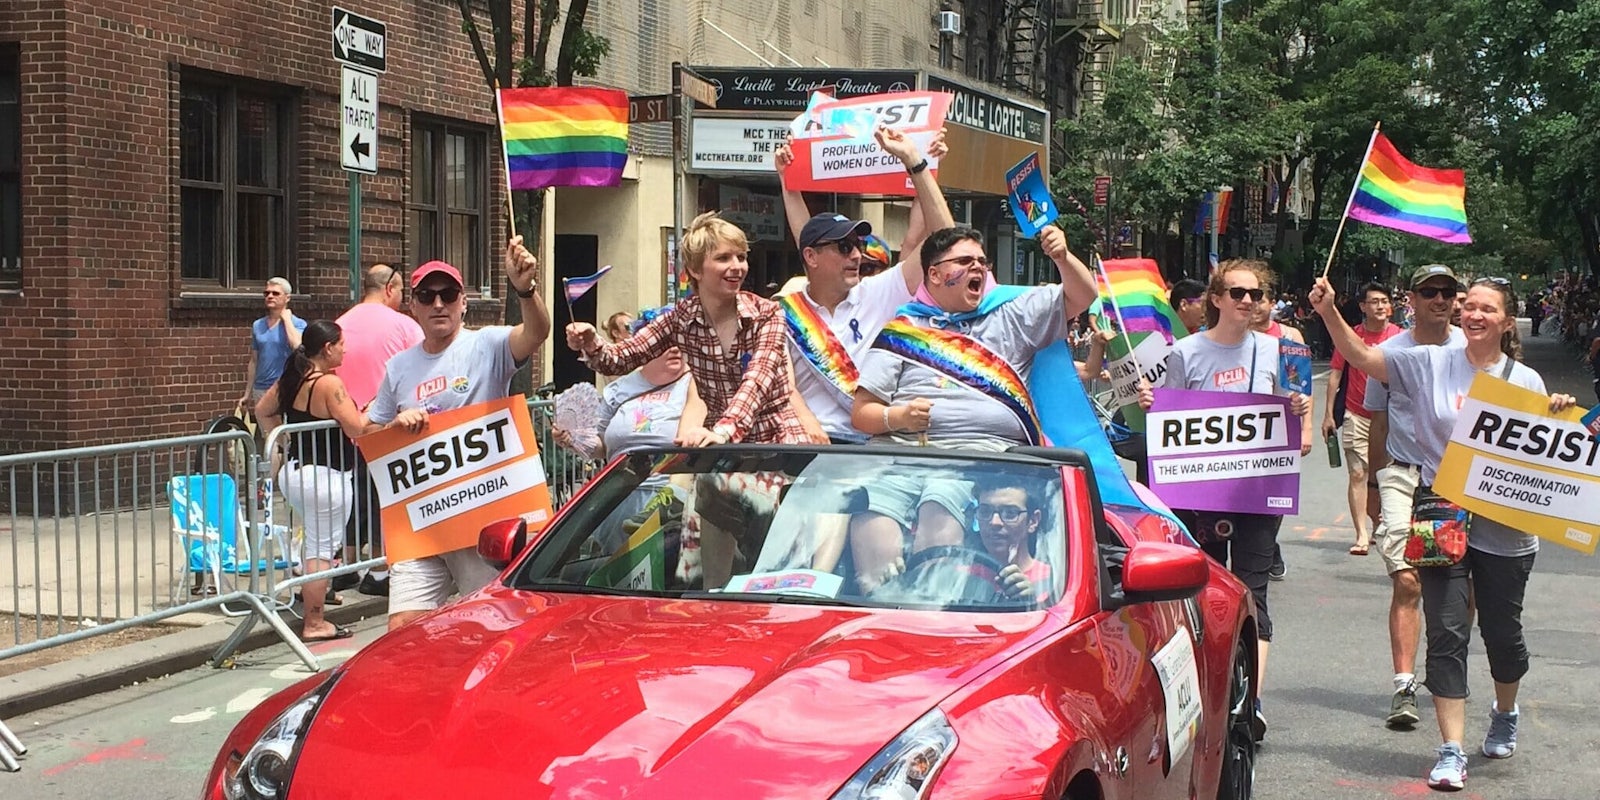 Chelsea Manning Pride